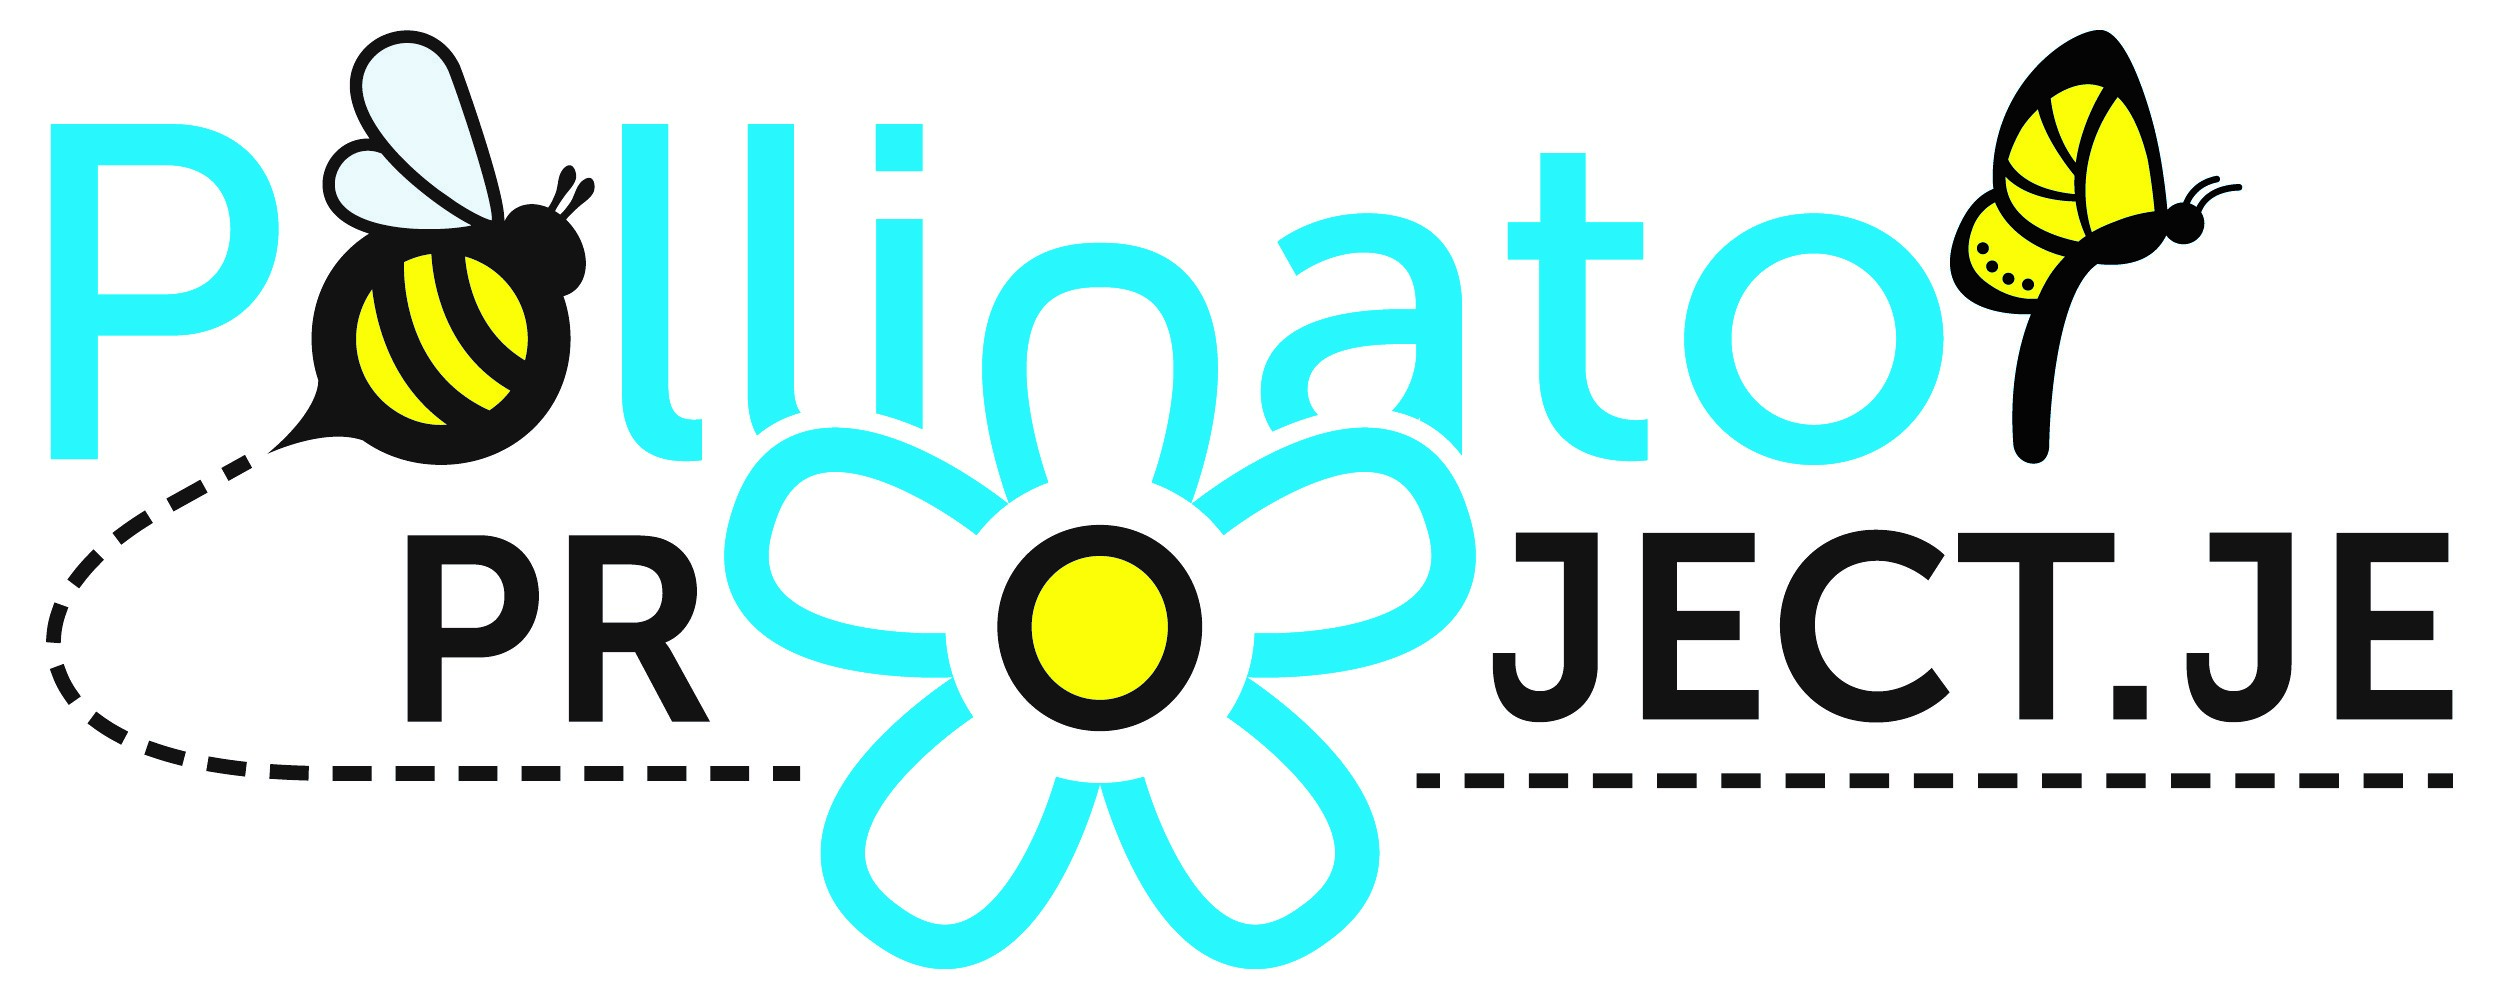 Polinator Project logo